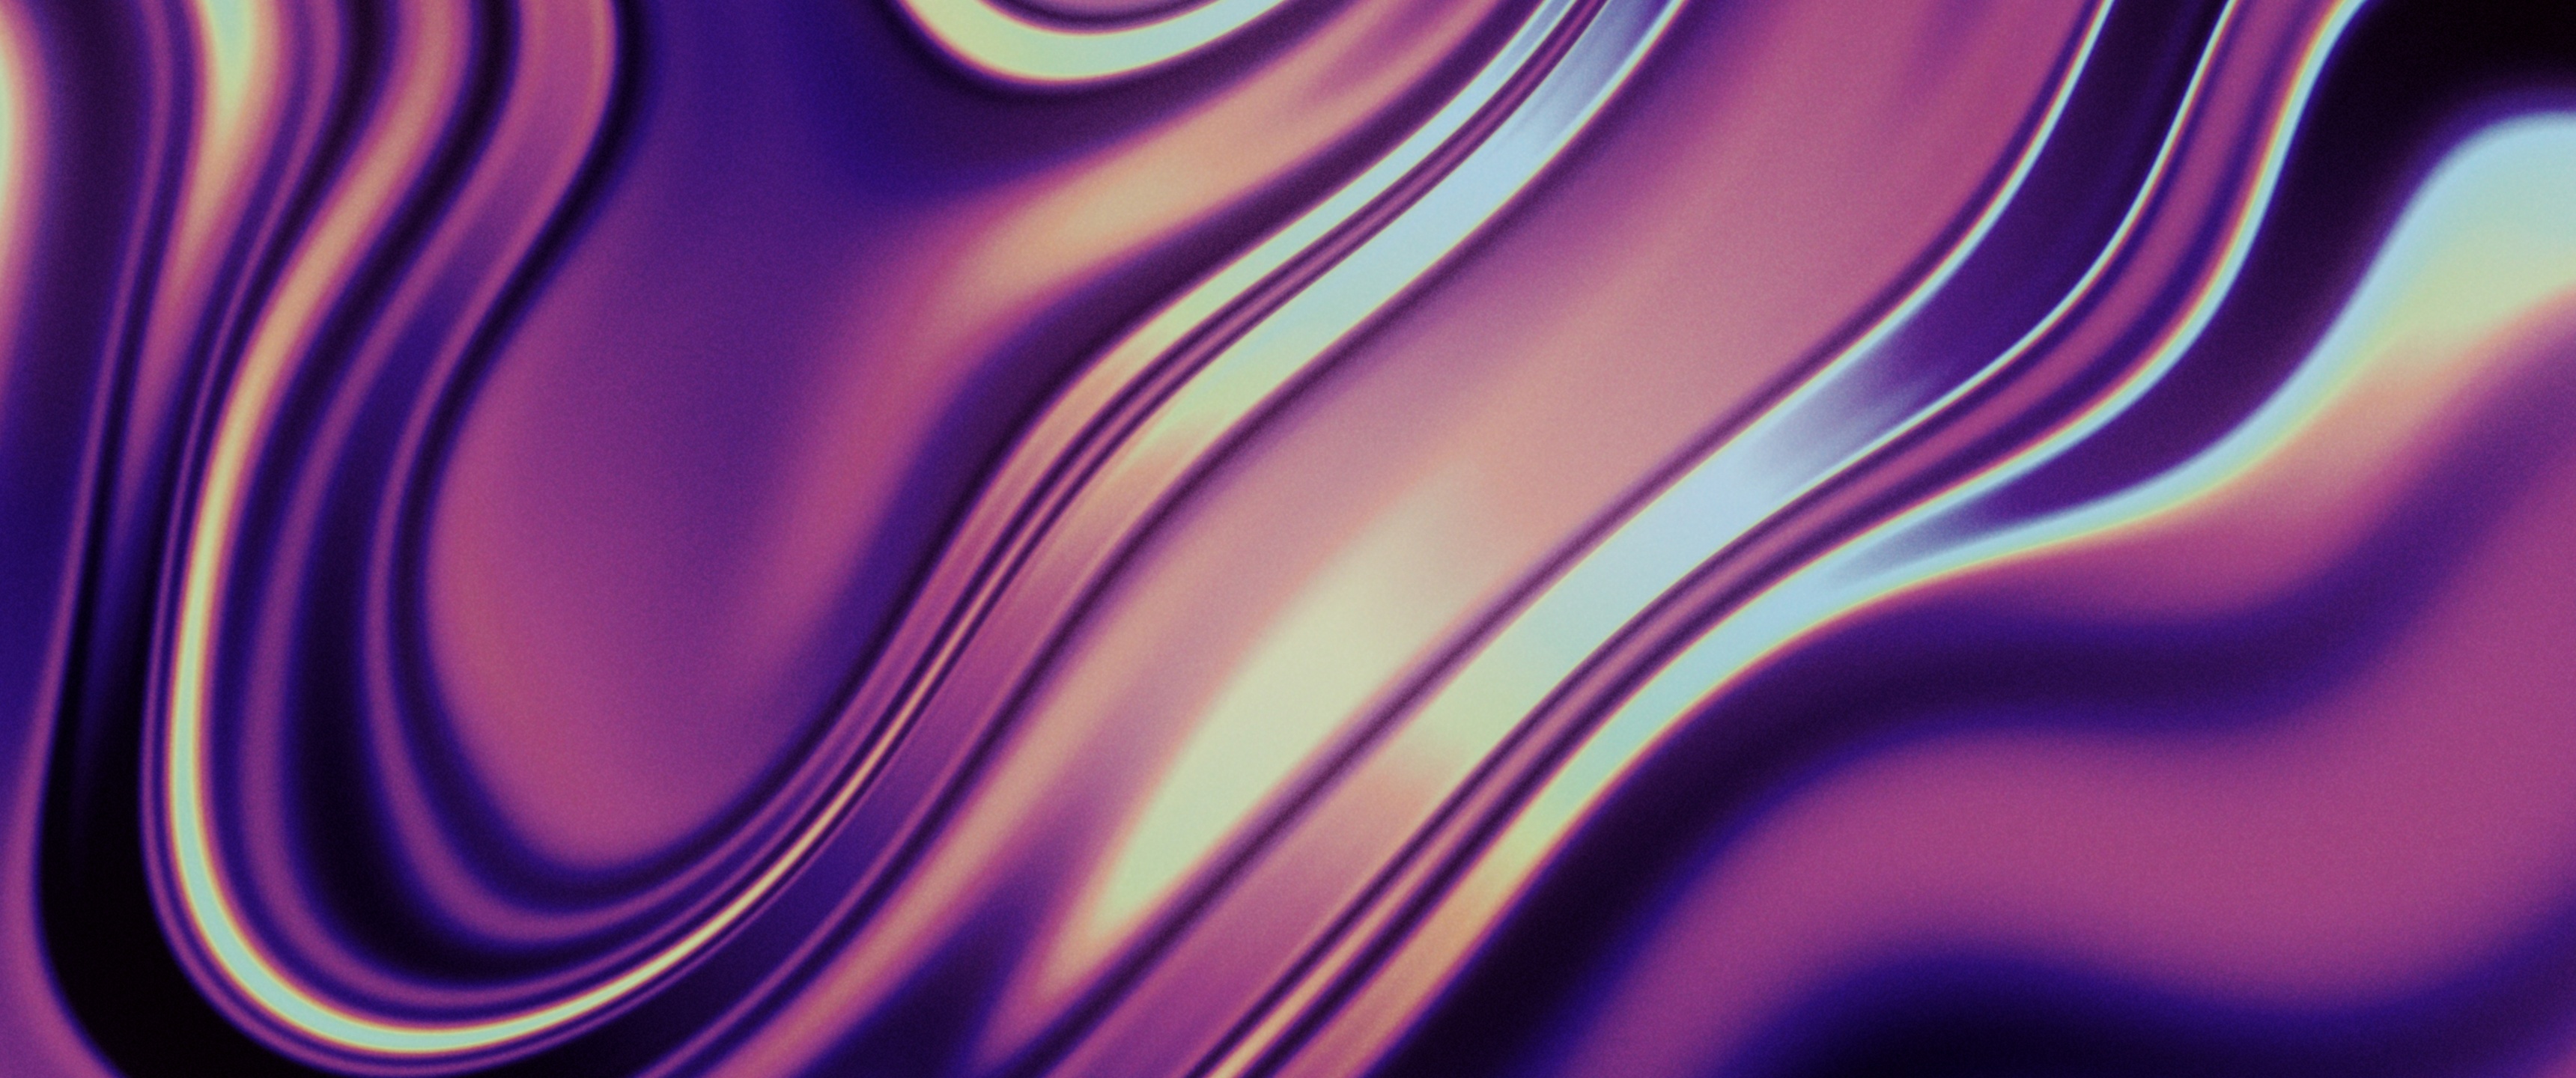 Waves Wallpaper 4K, Purple, 5K, Abstract